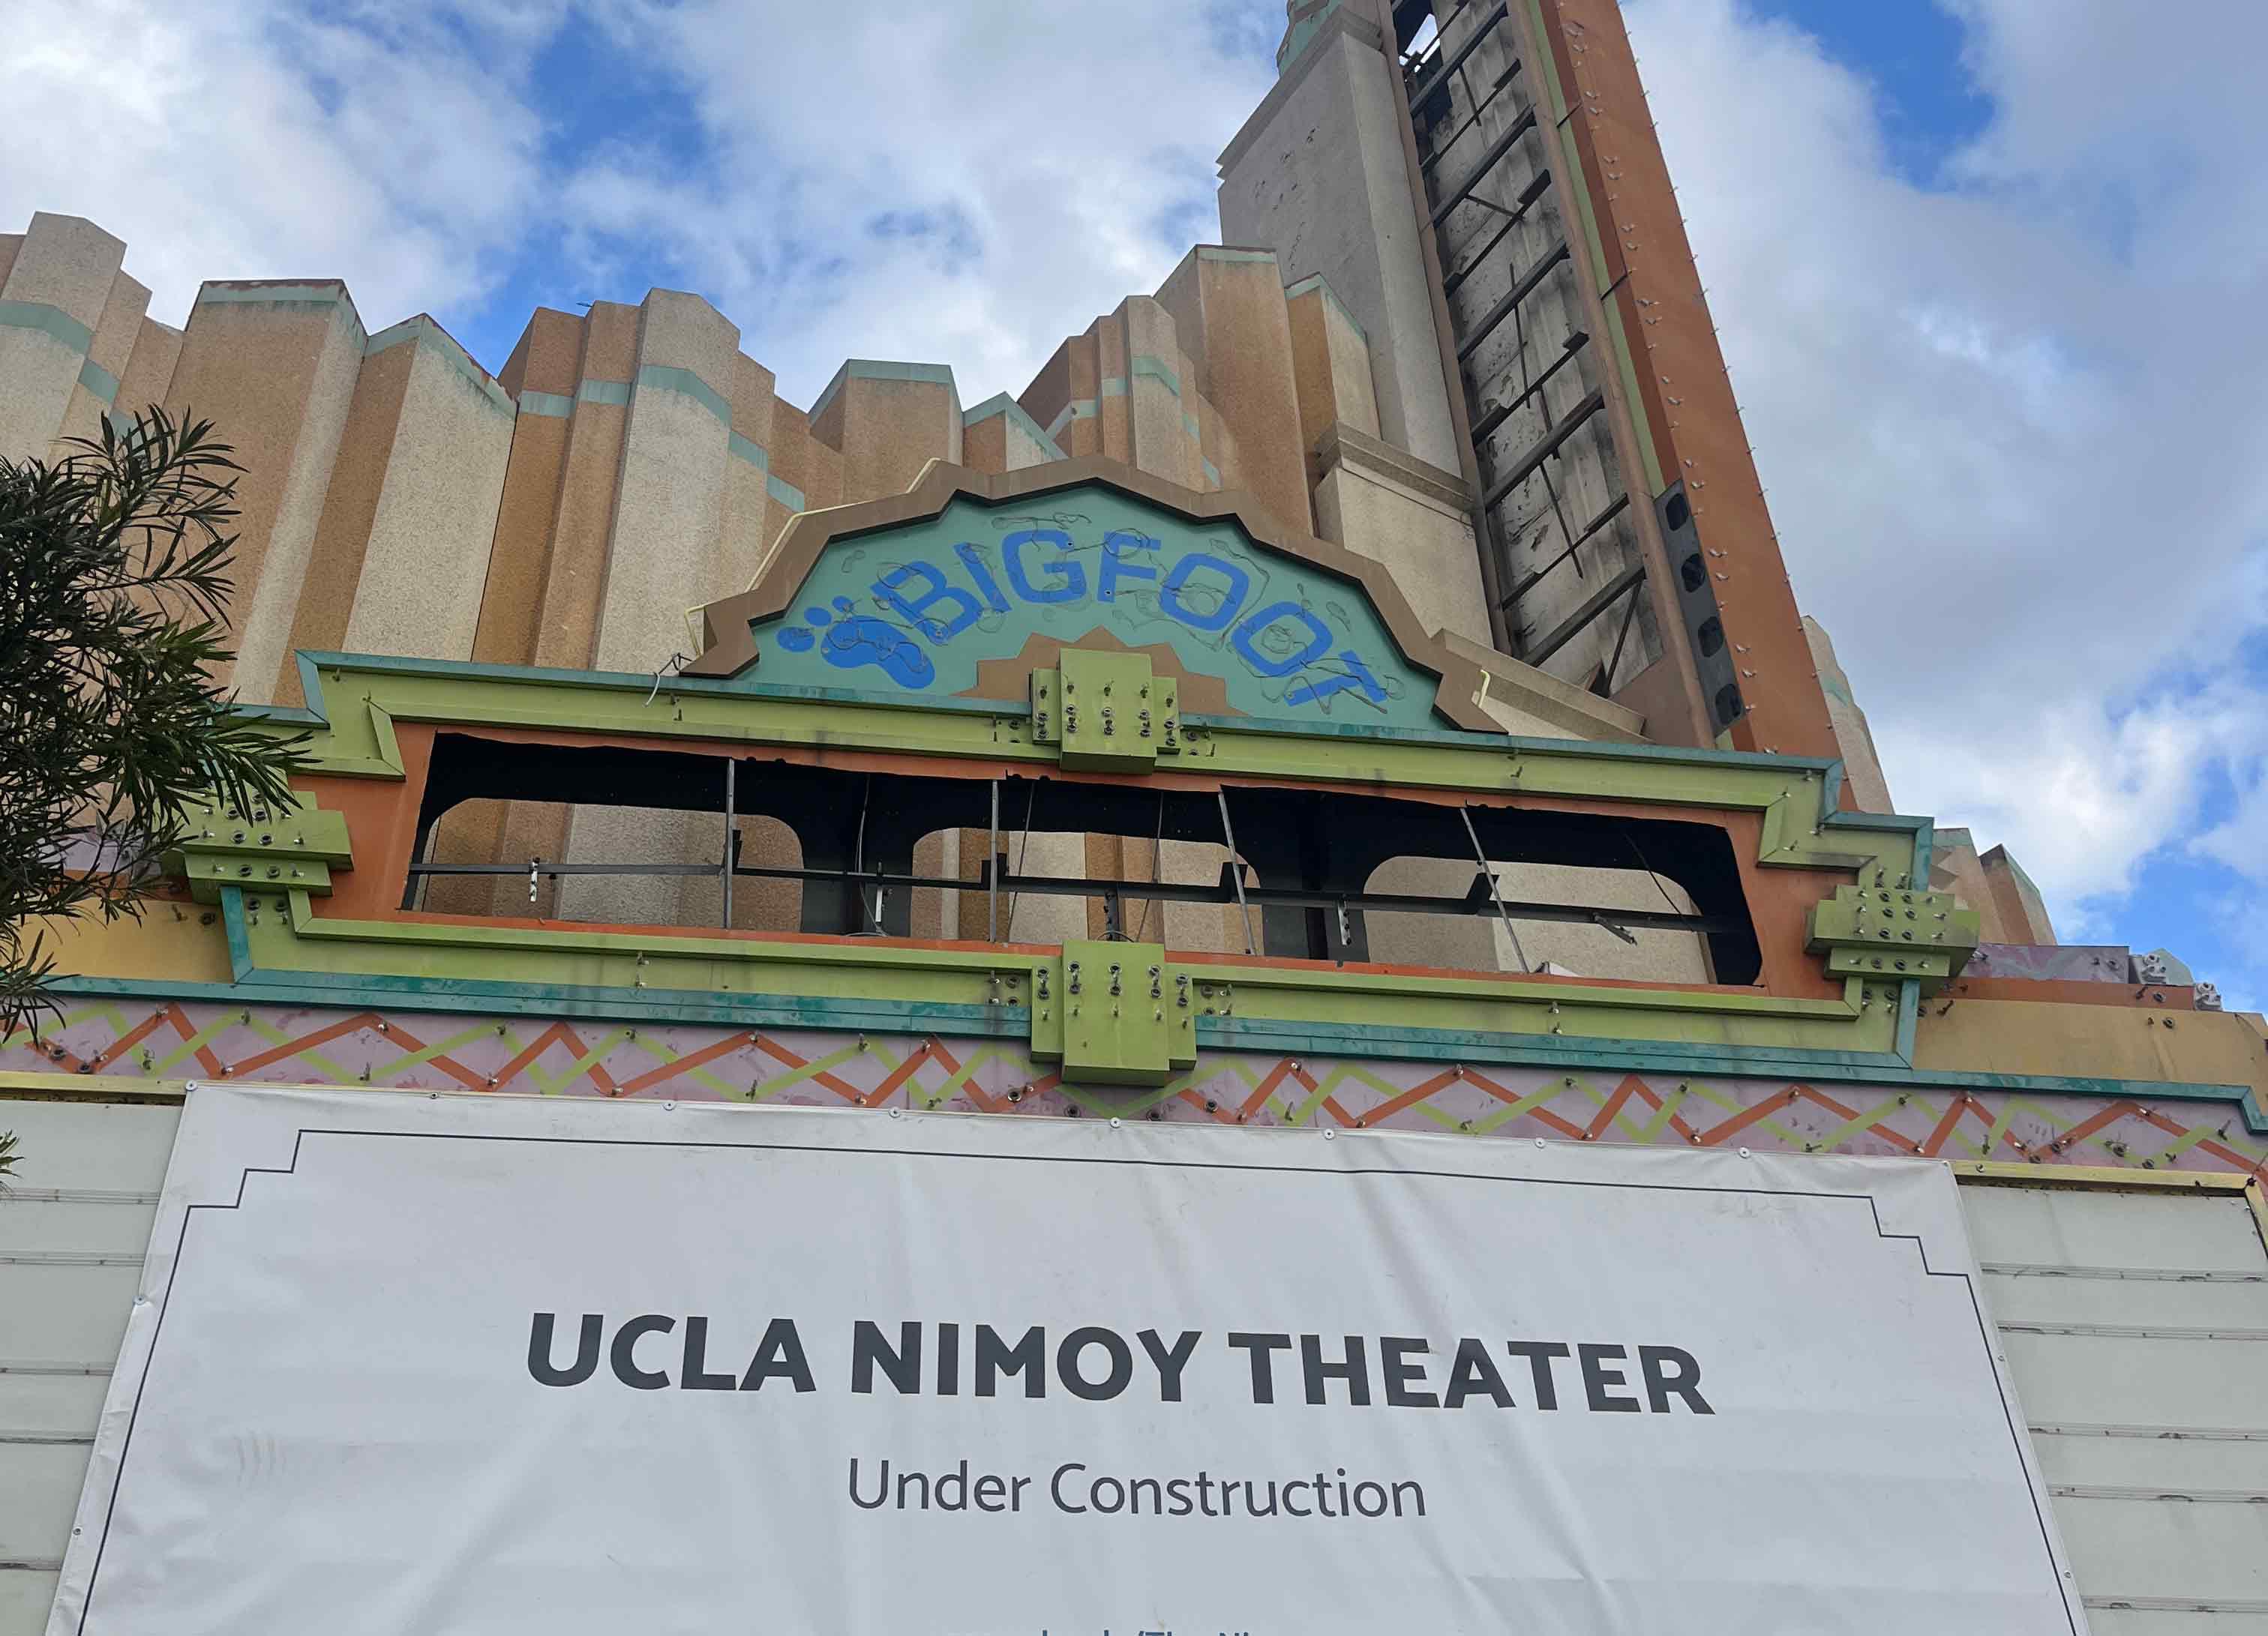 UCLA Nimoy Theater construction making progress